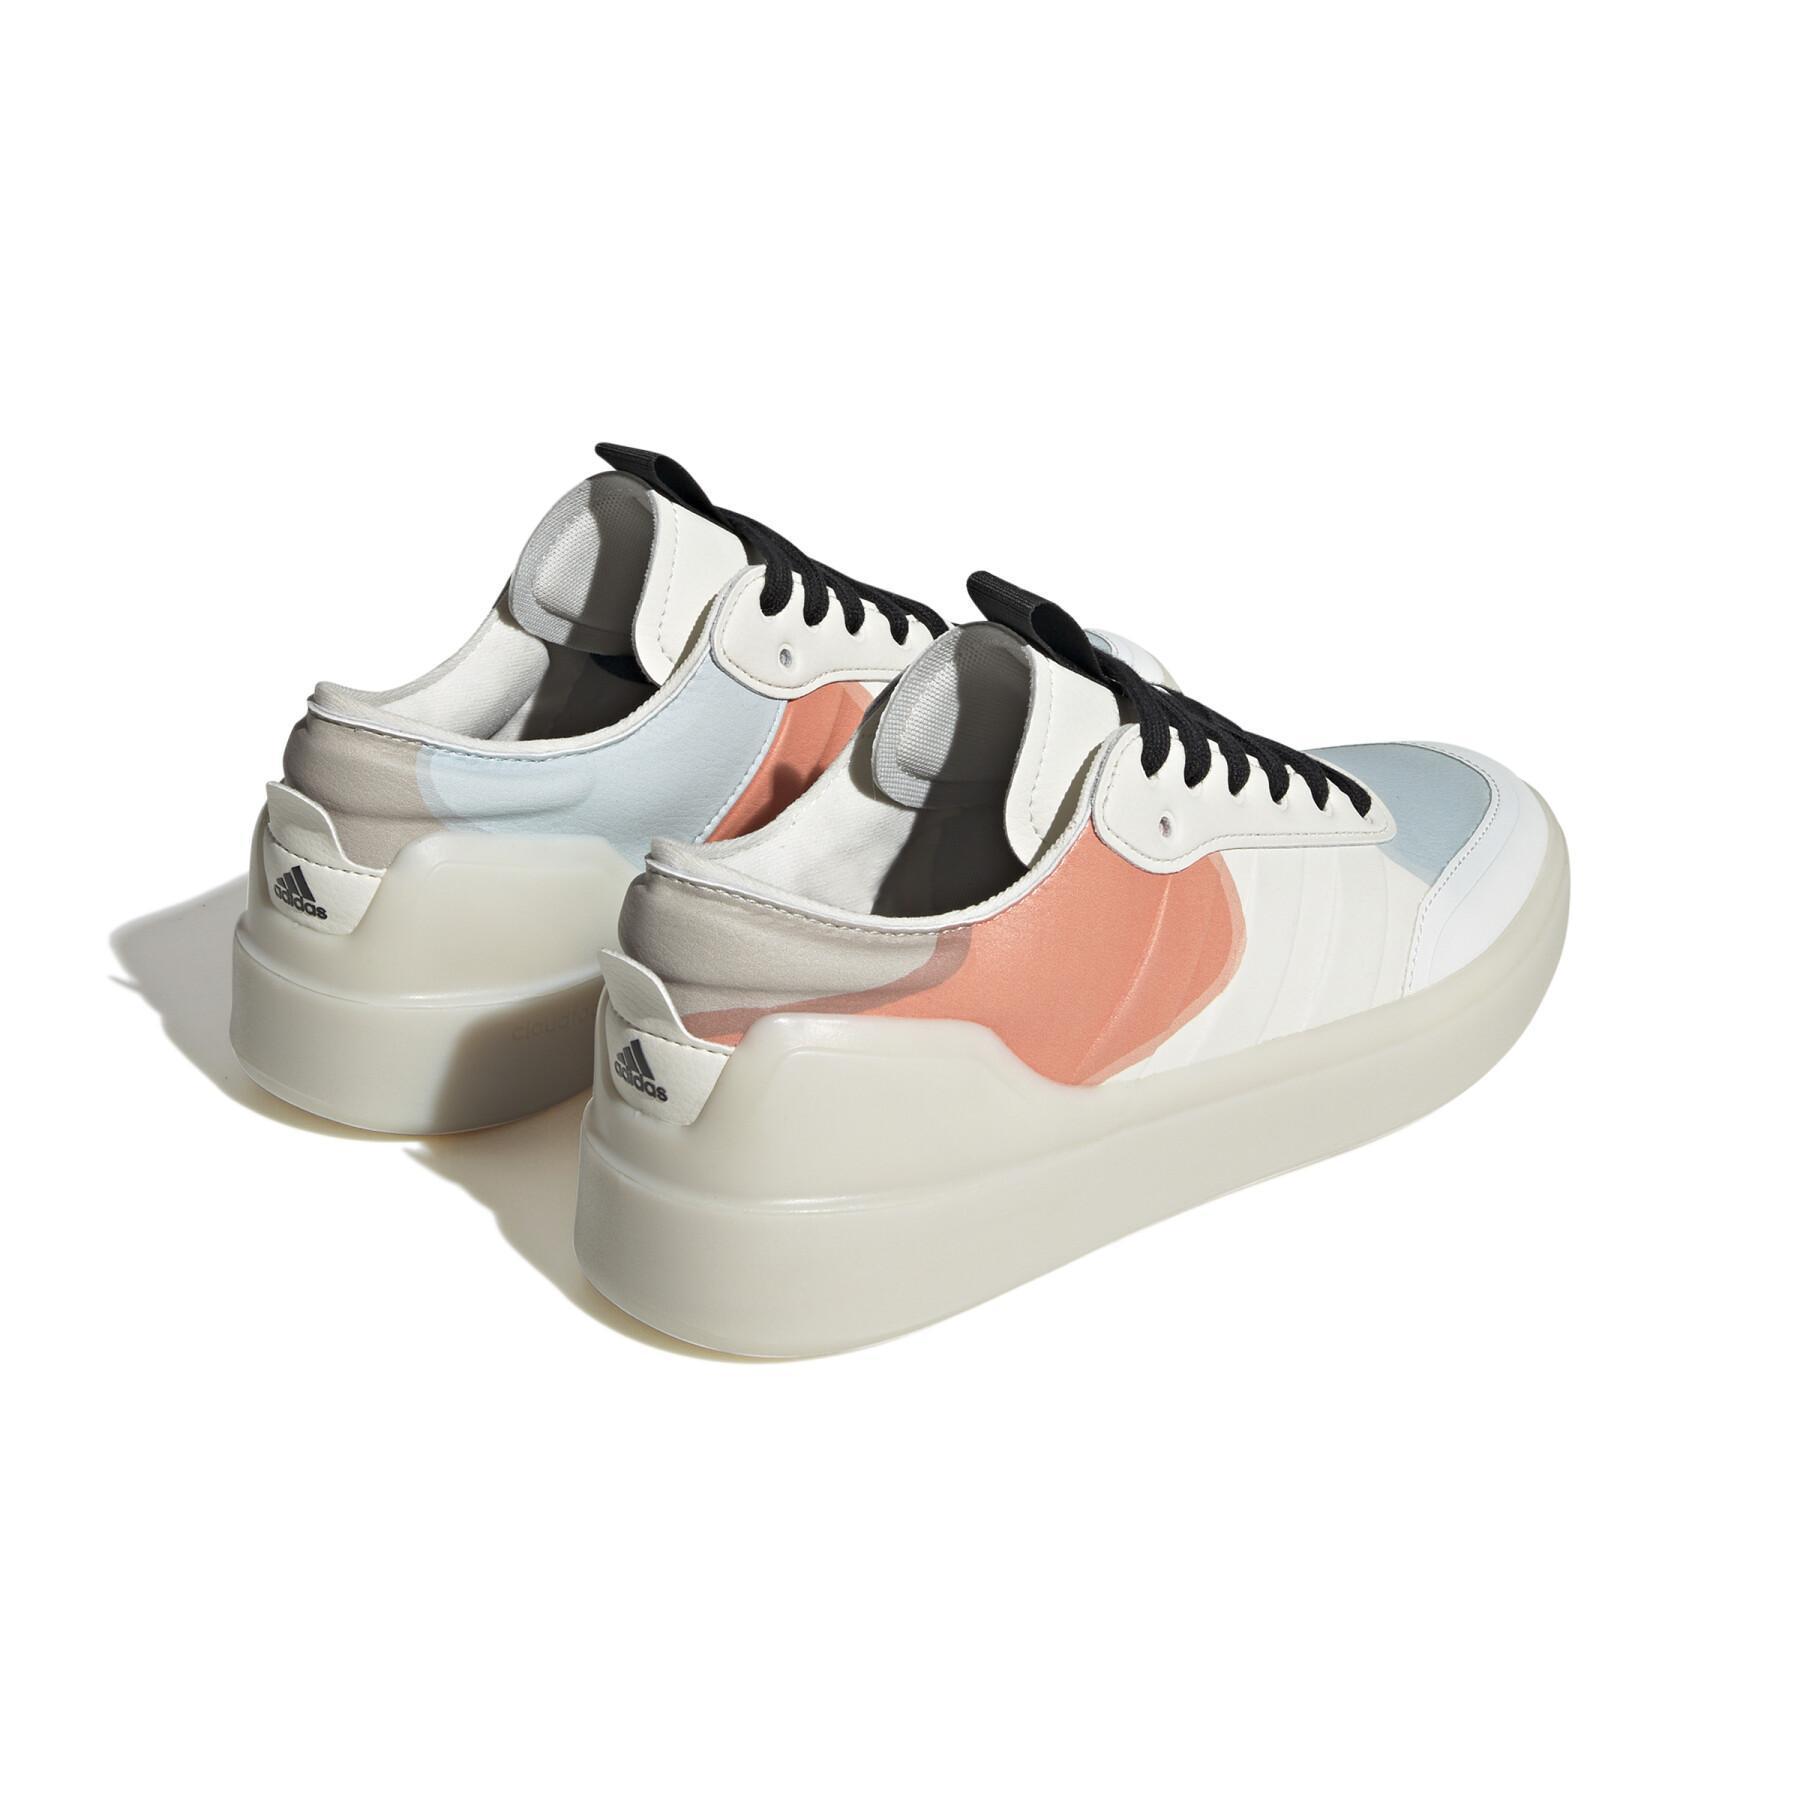 Women's sneakers adidas X Marimekko Court Revival